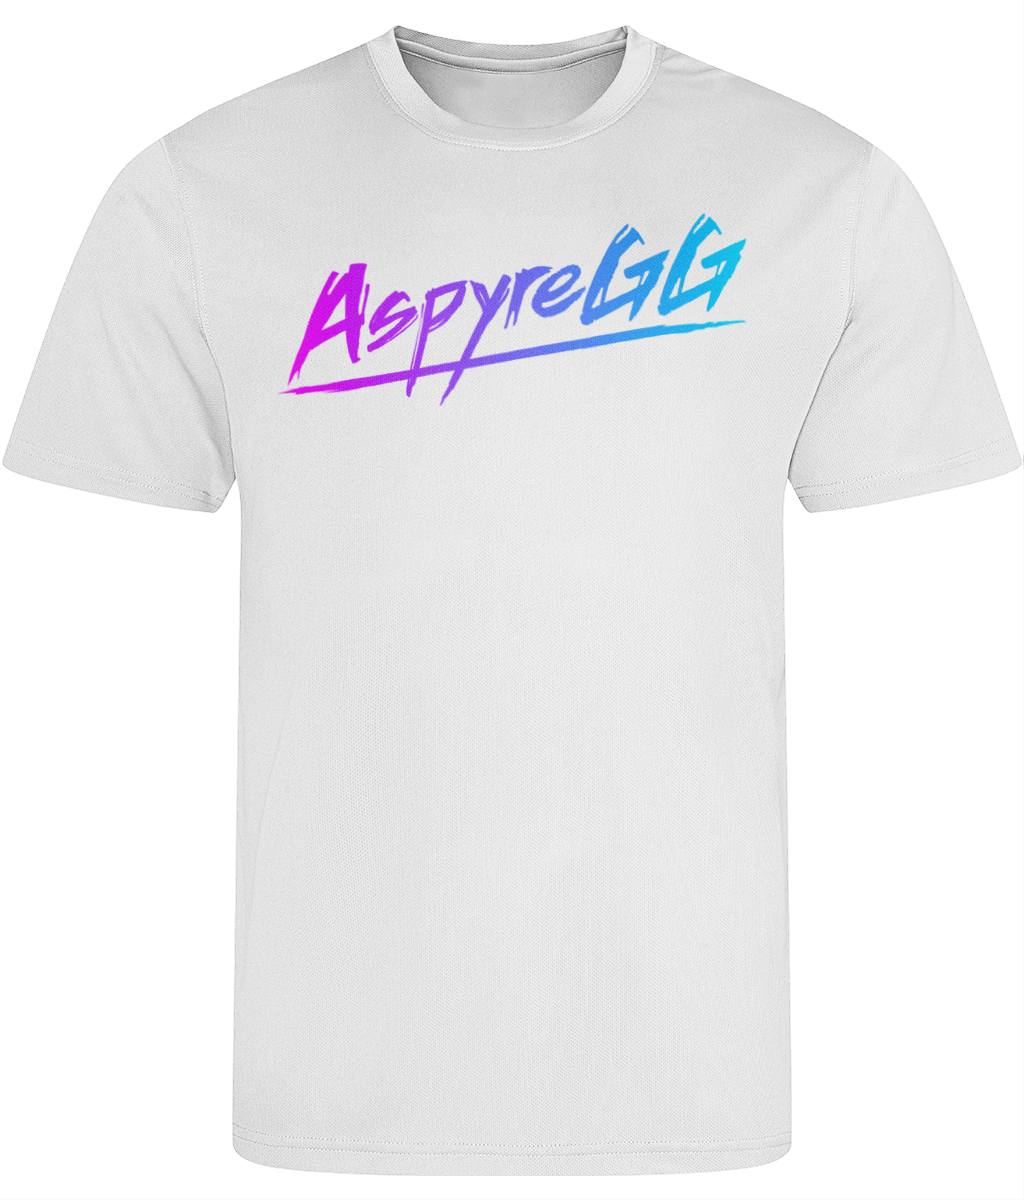 AspyreGG Men's Cool Sports T-shirt